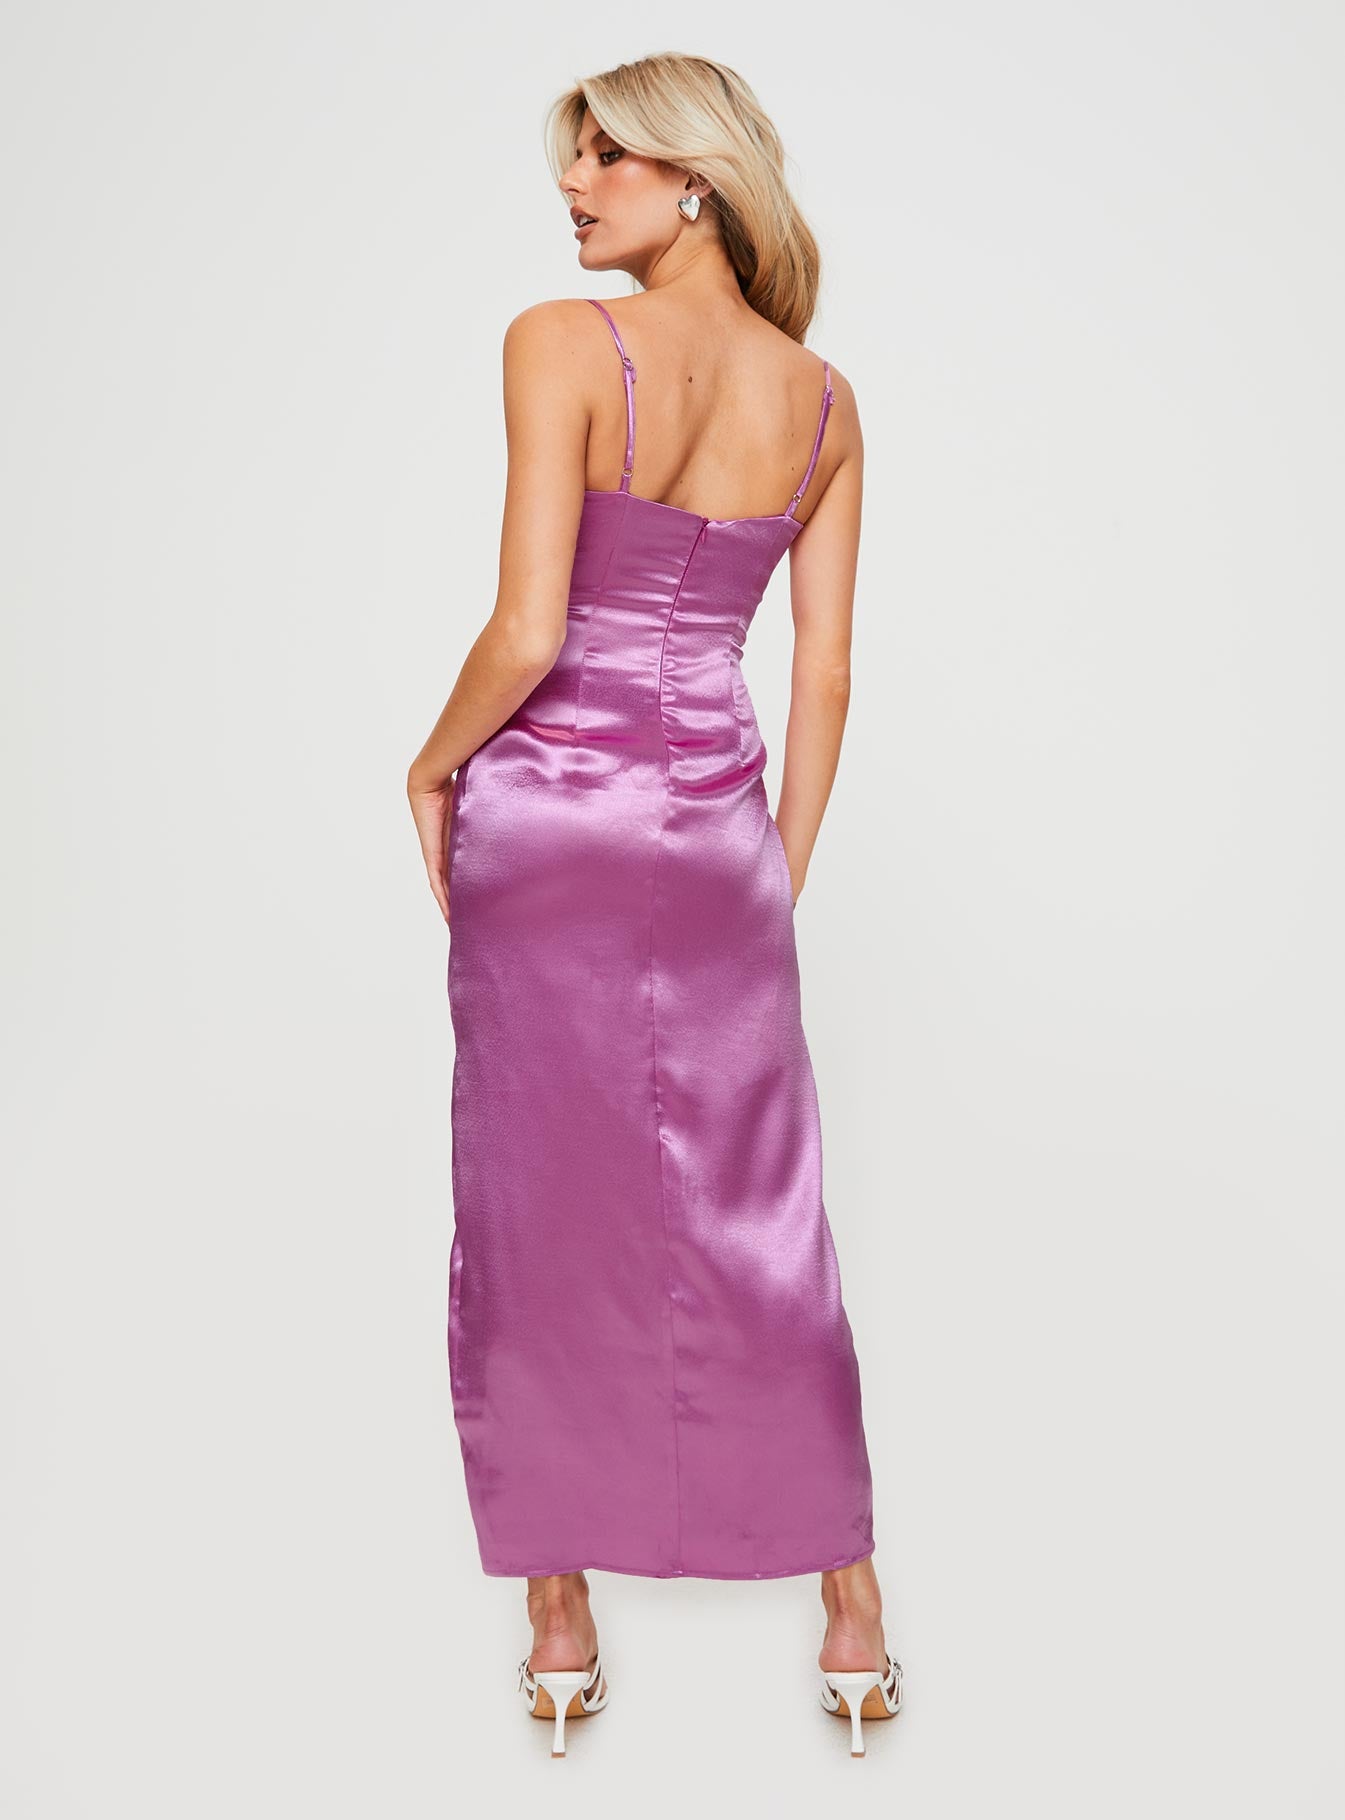 Shop Formal Dress - Amandine Maxi Dress Pink featured image